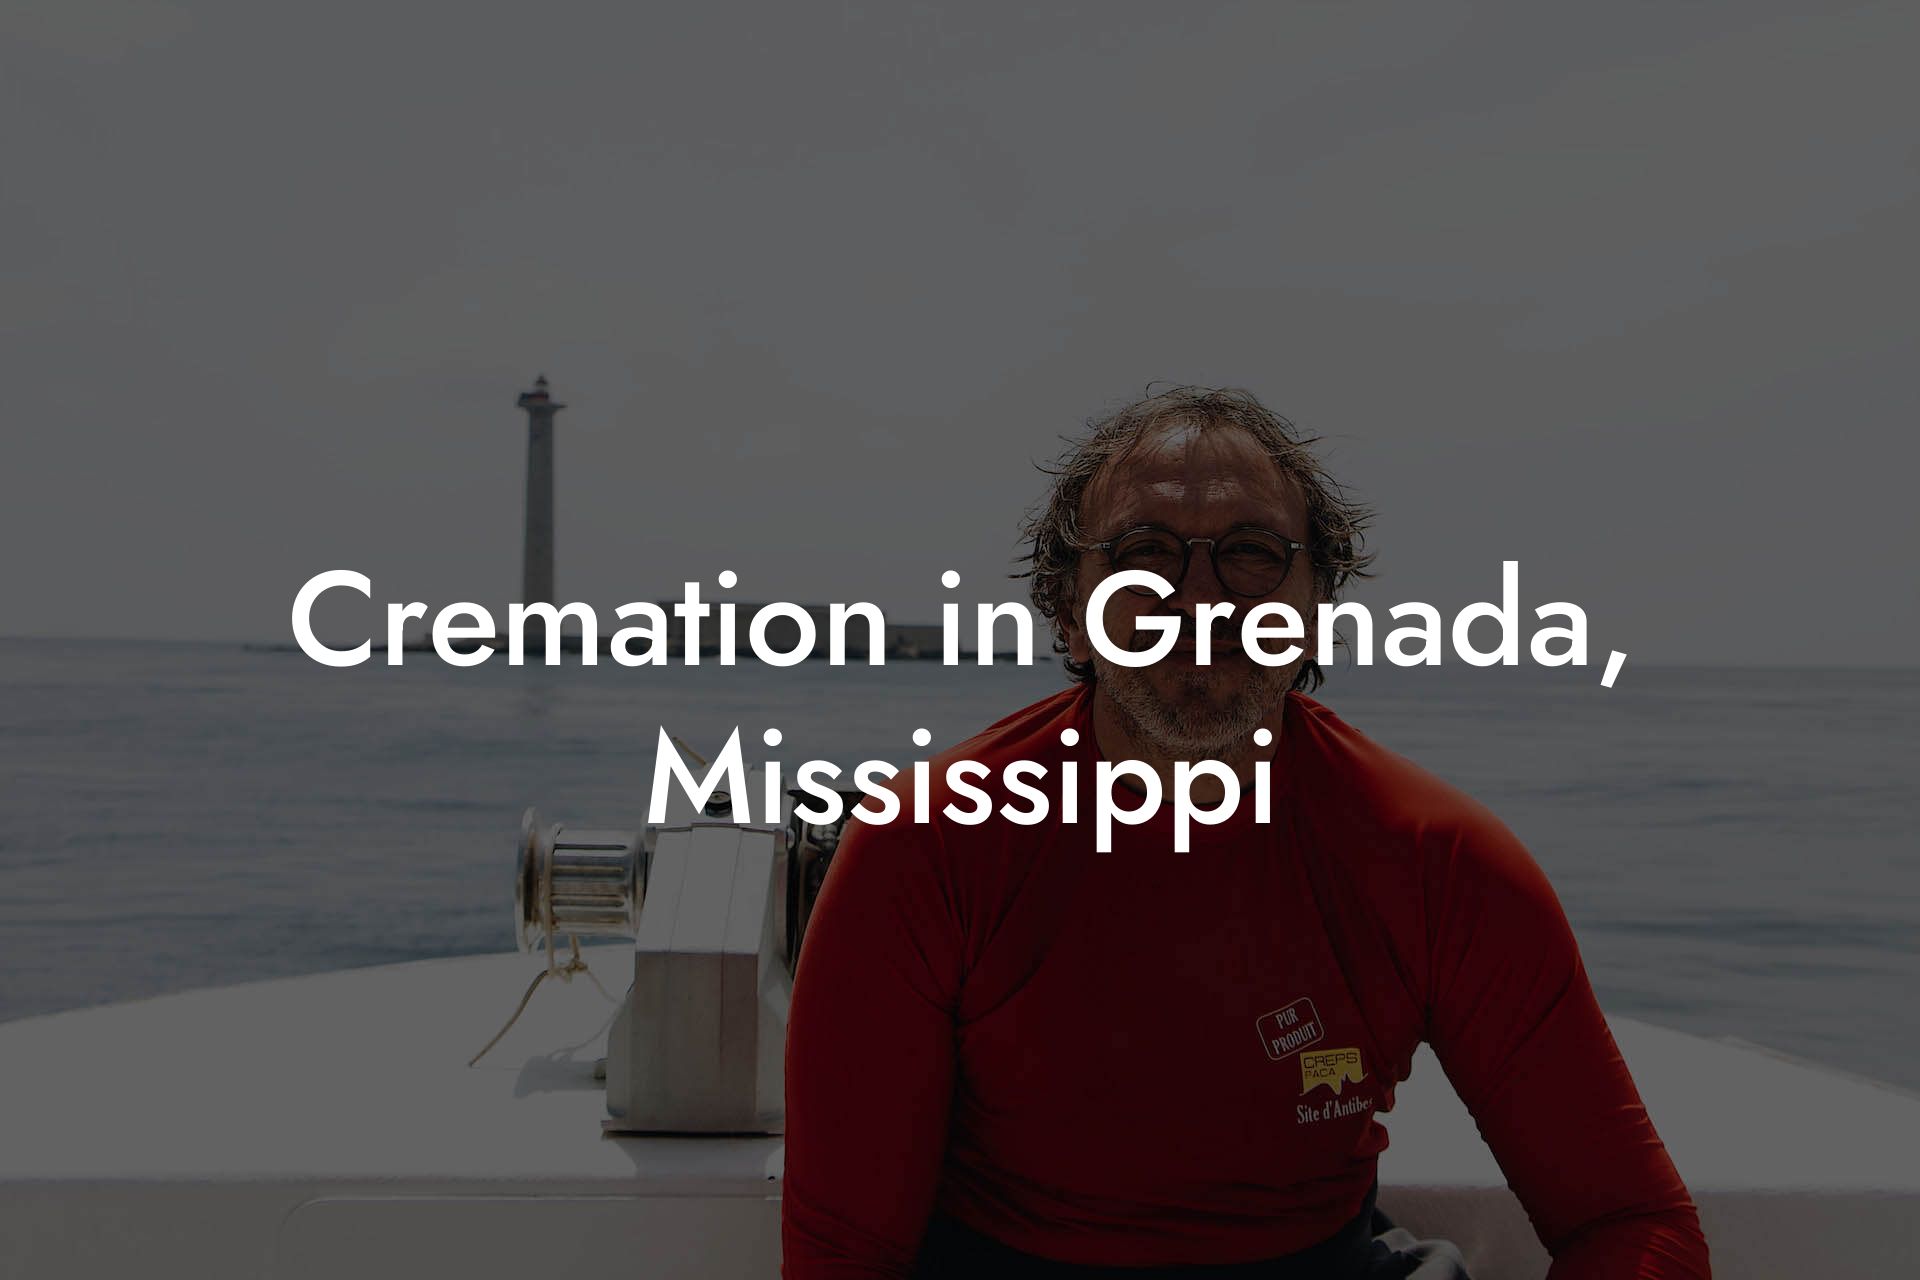 Cremation in Grenada, Mississippi